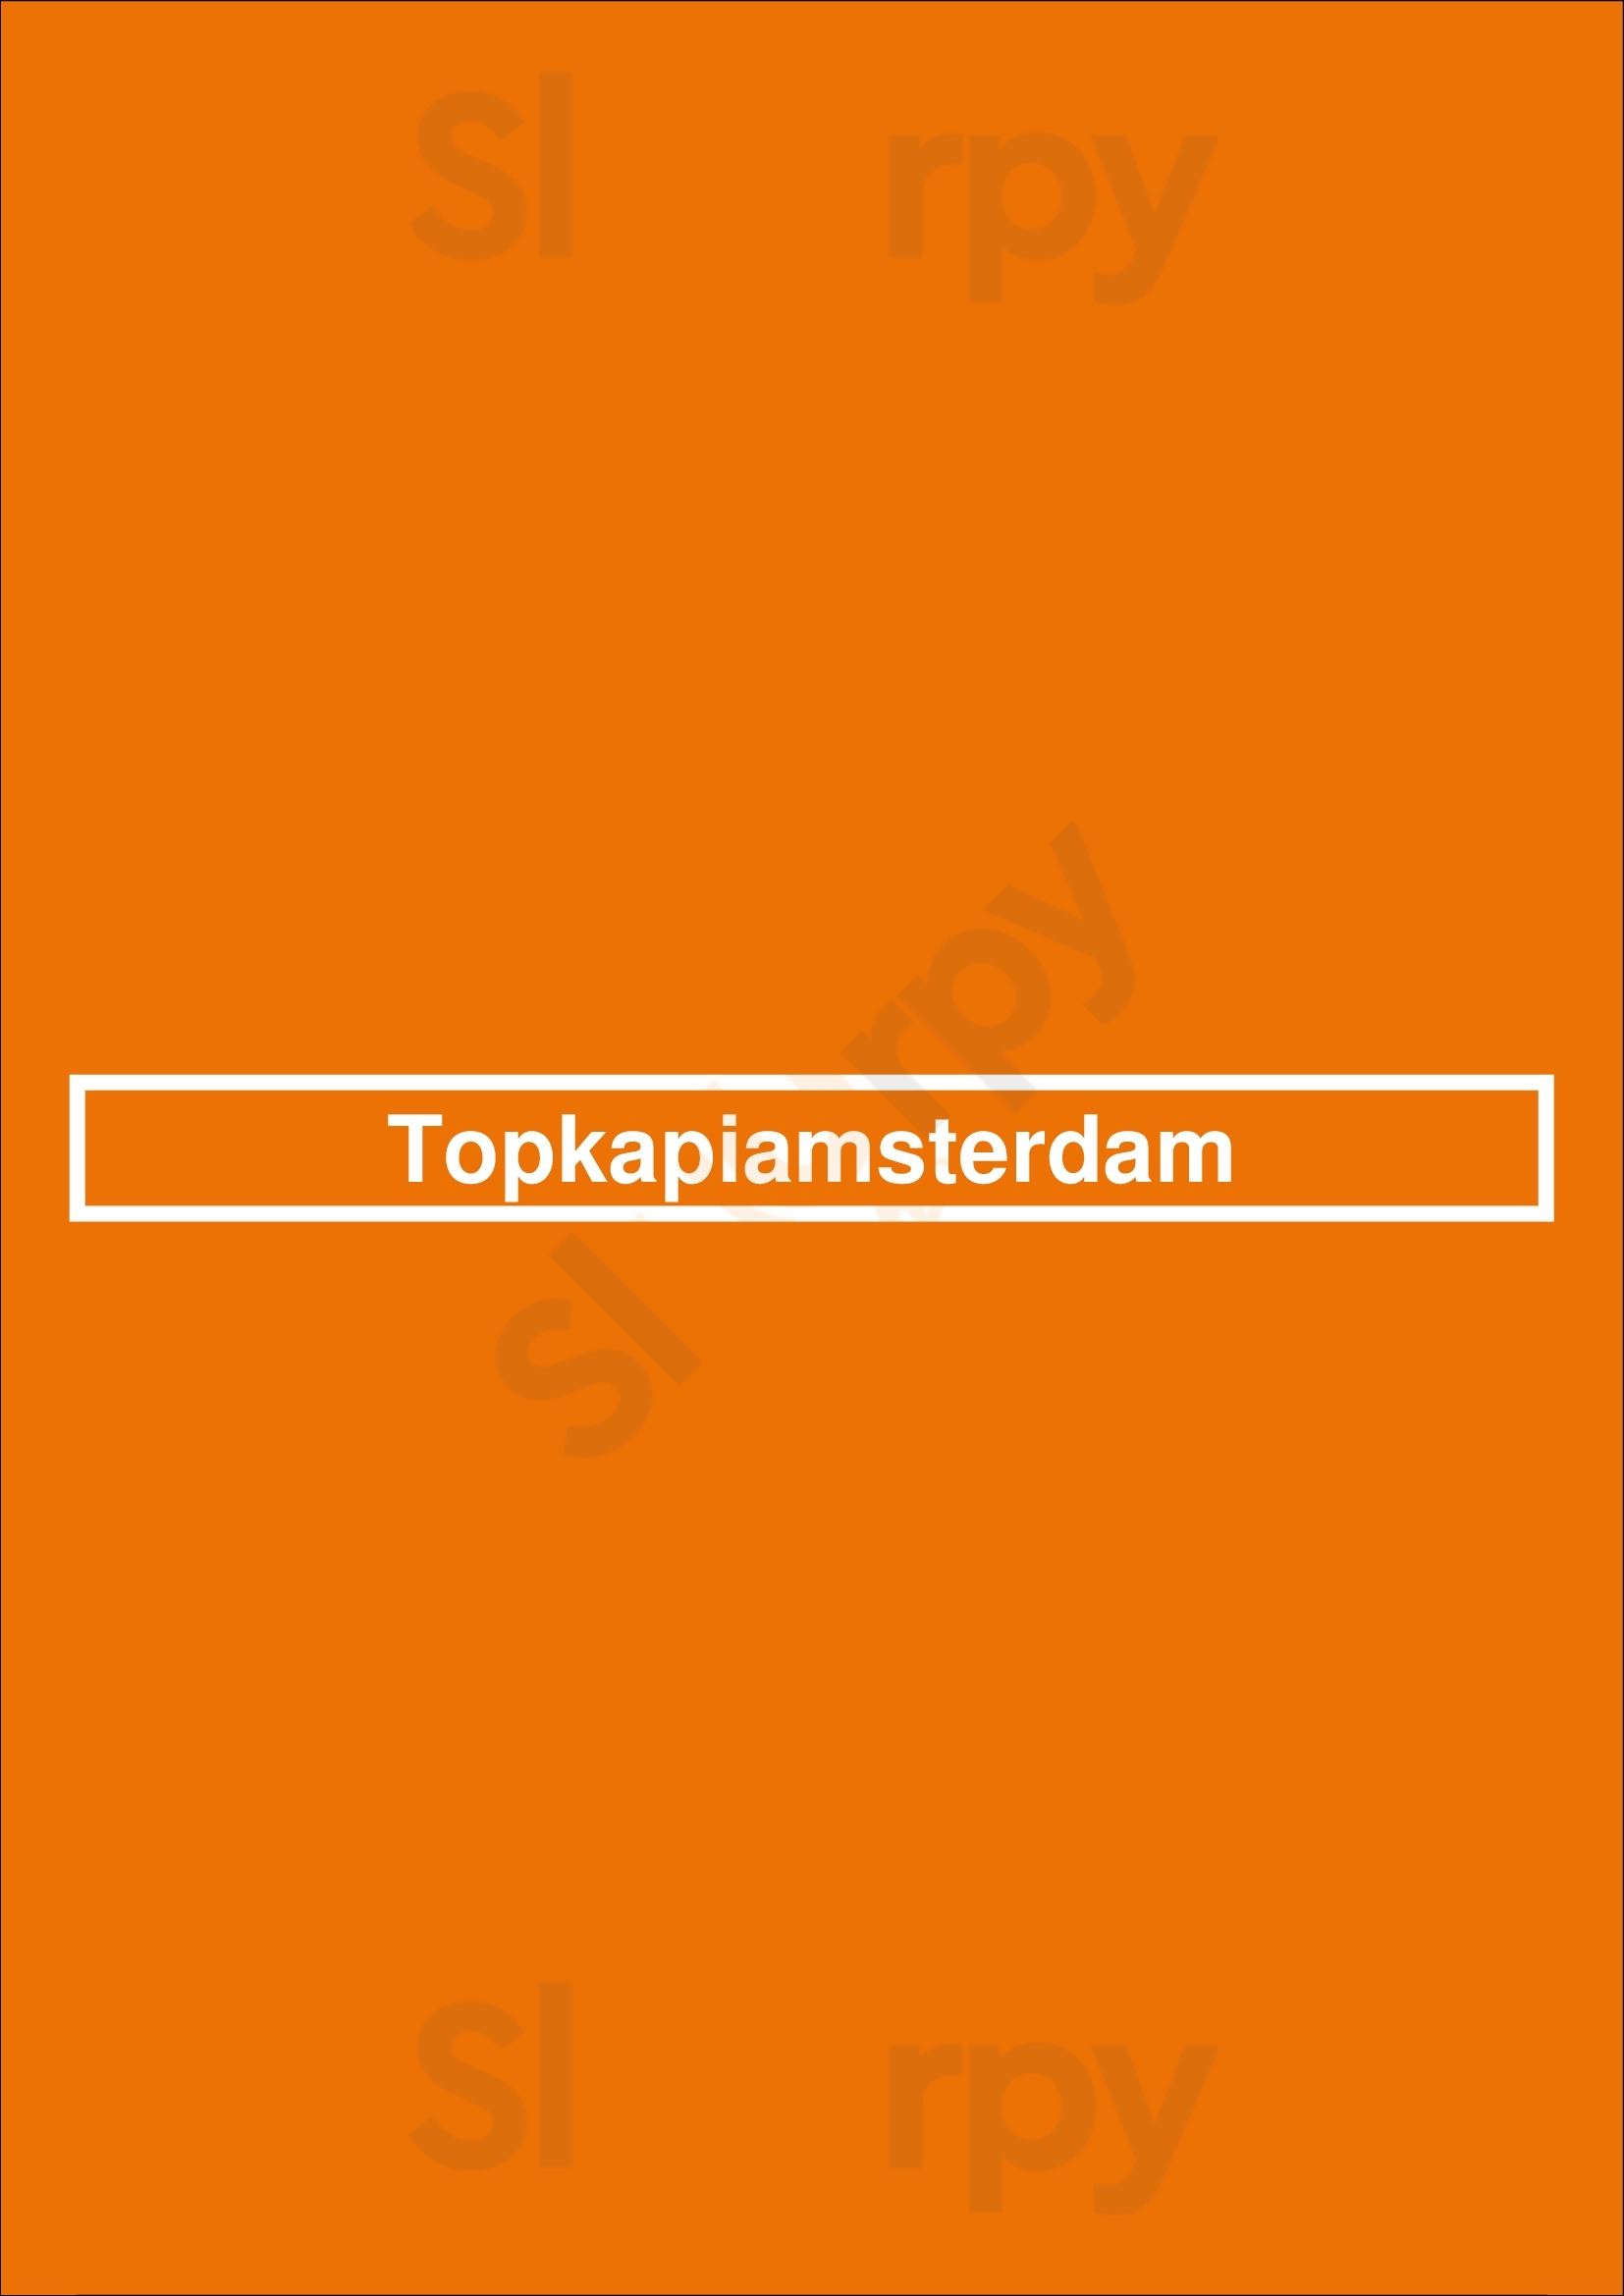 Topkapiamsterdam Amsterdam Menu - 1